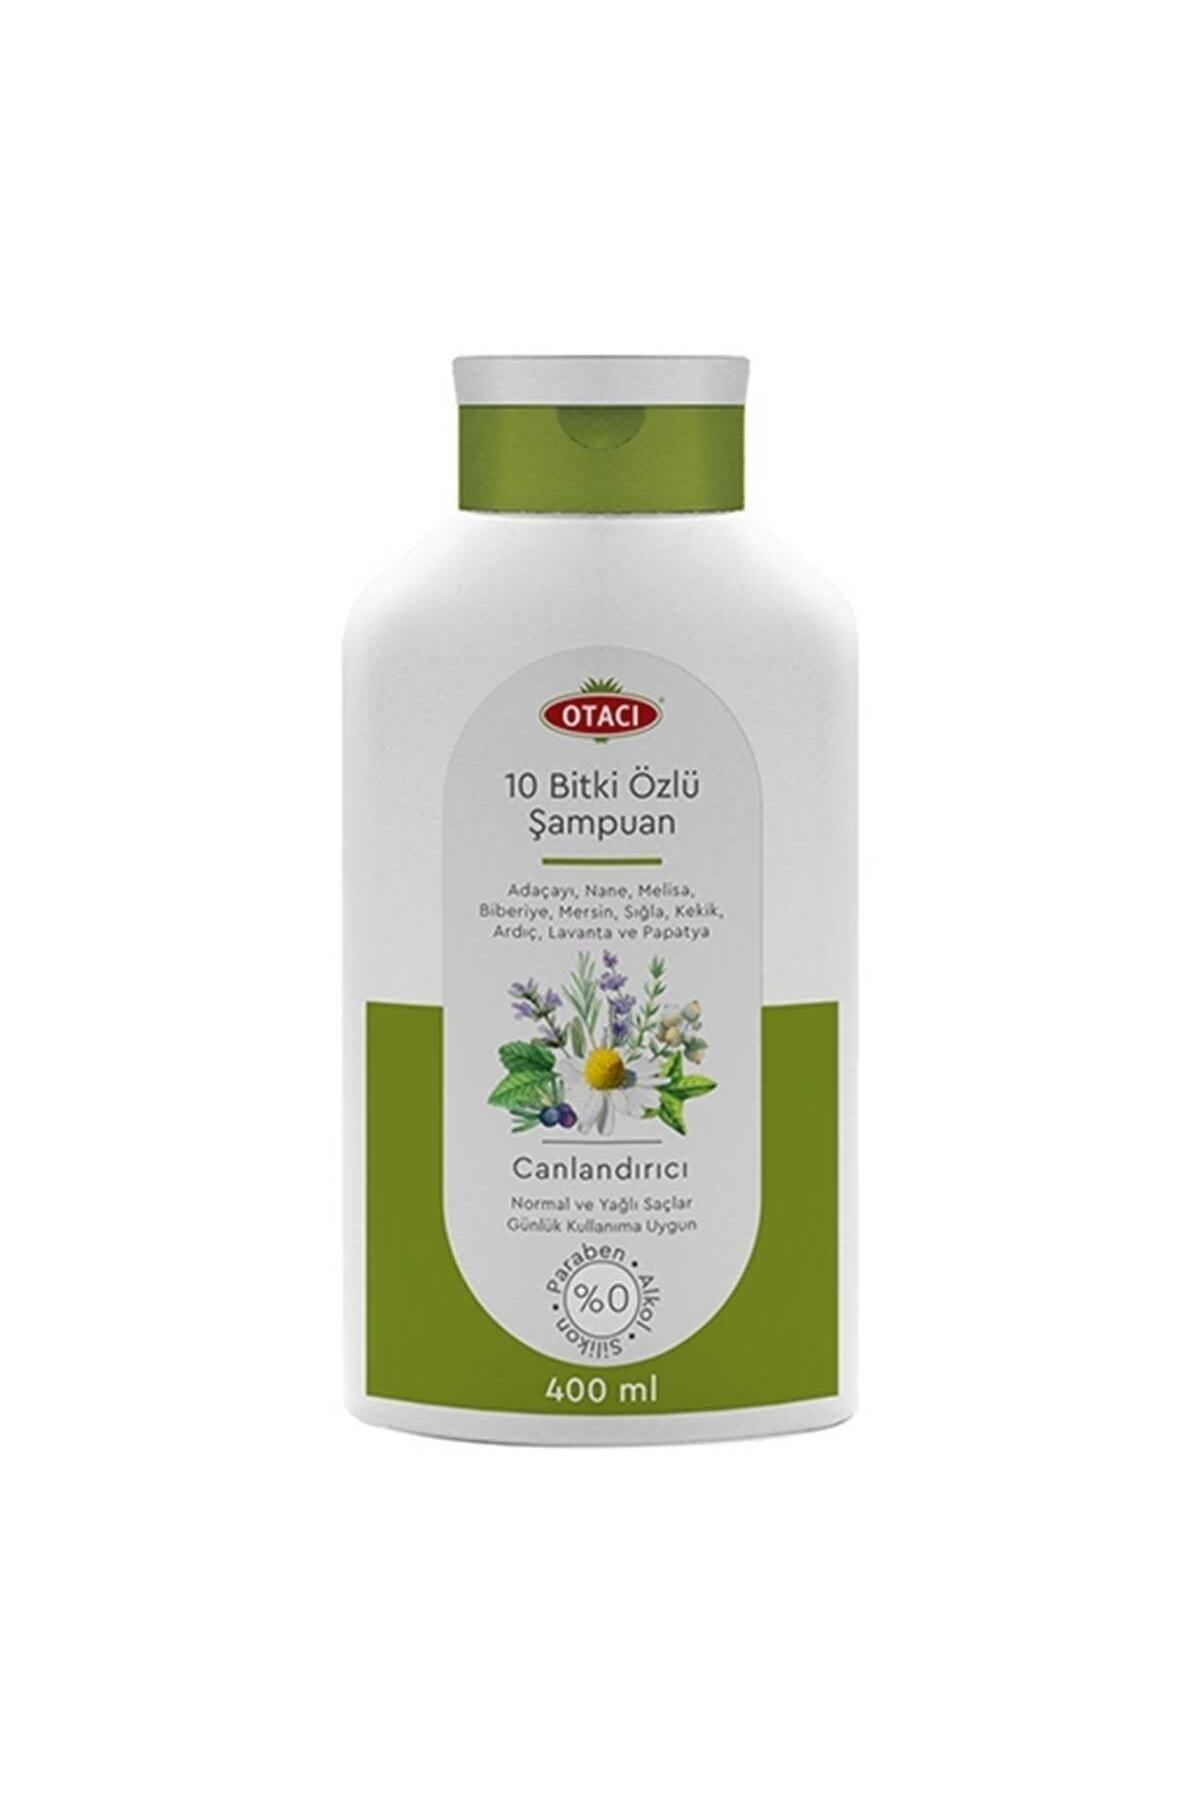 Otacı Ten Herbal Nourishing Shampoo 400 ml Naturals27